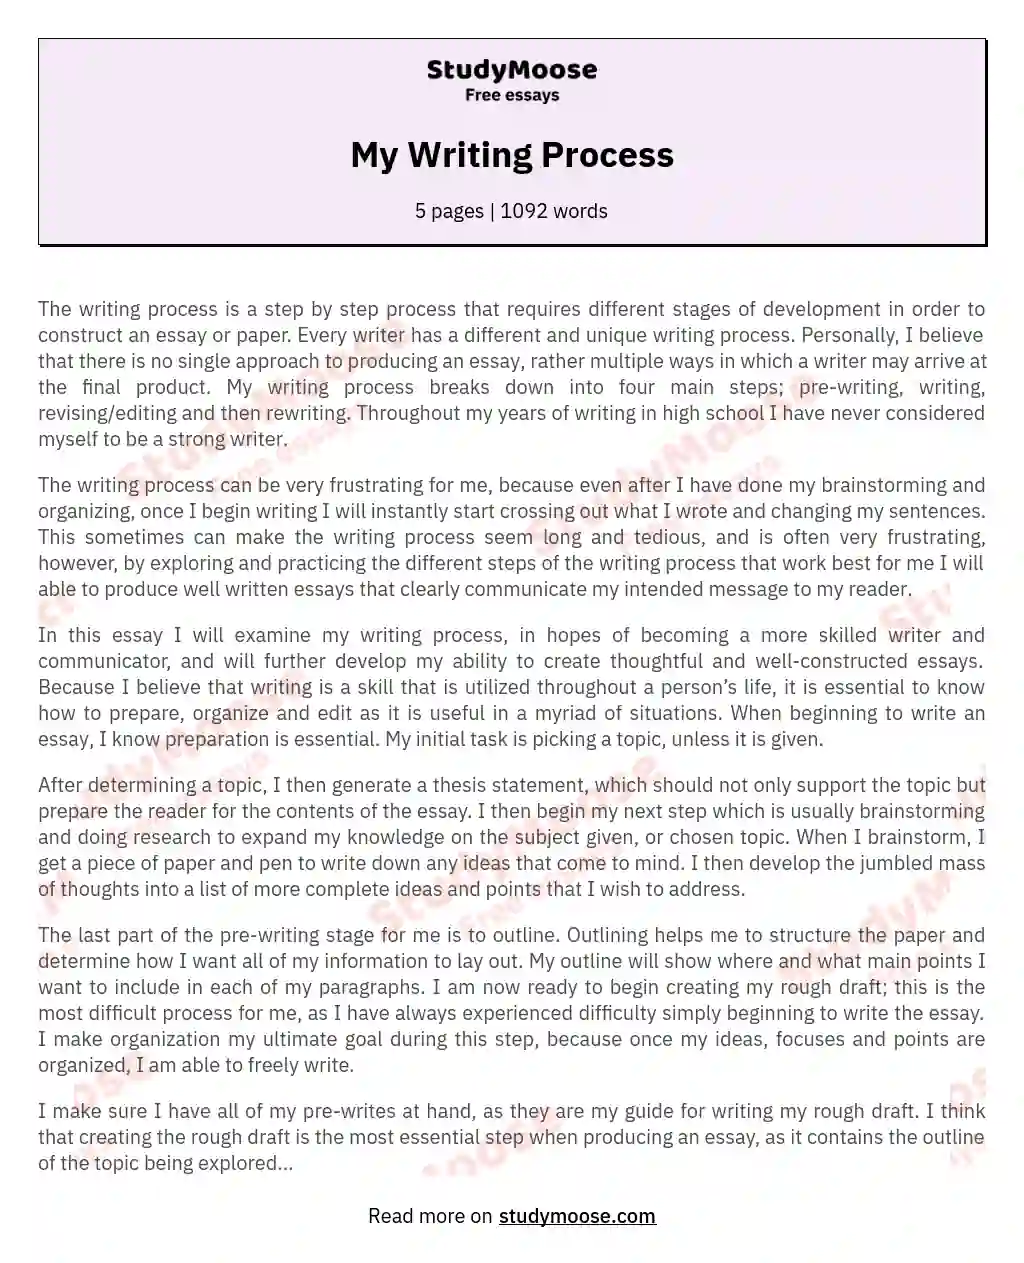 My Writing Process essay